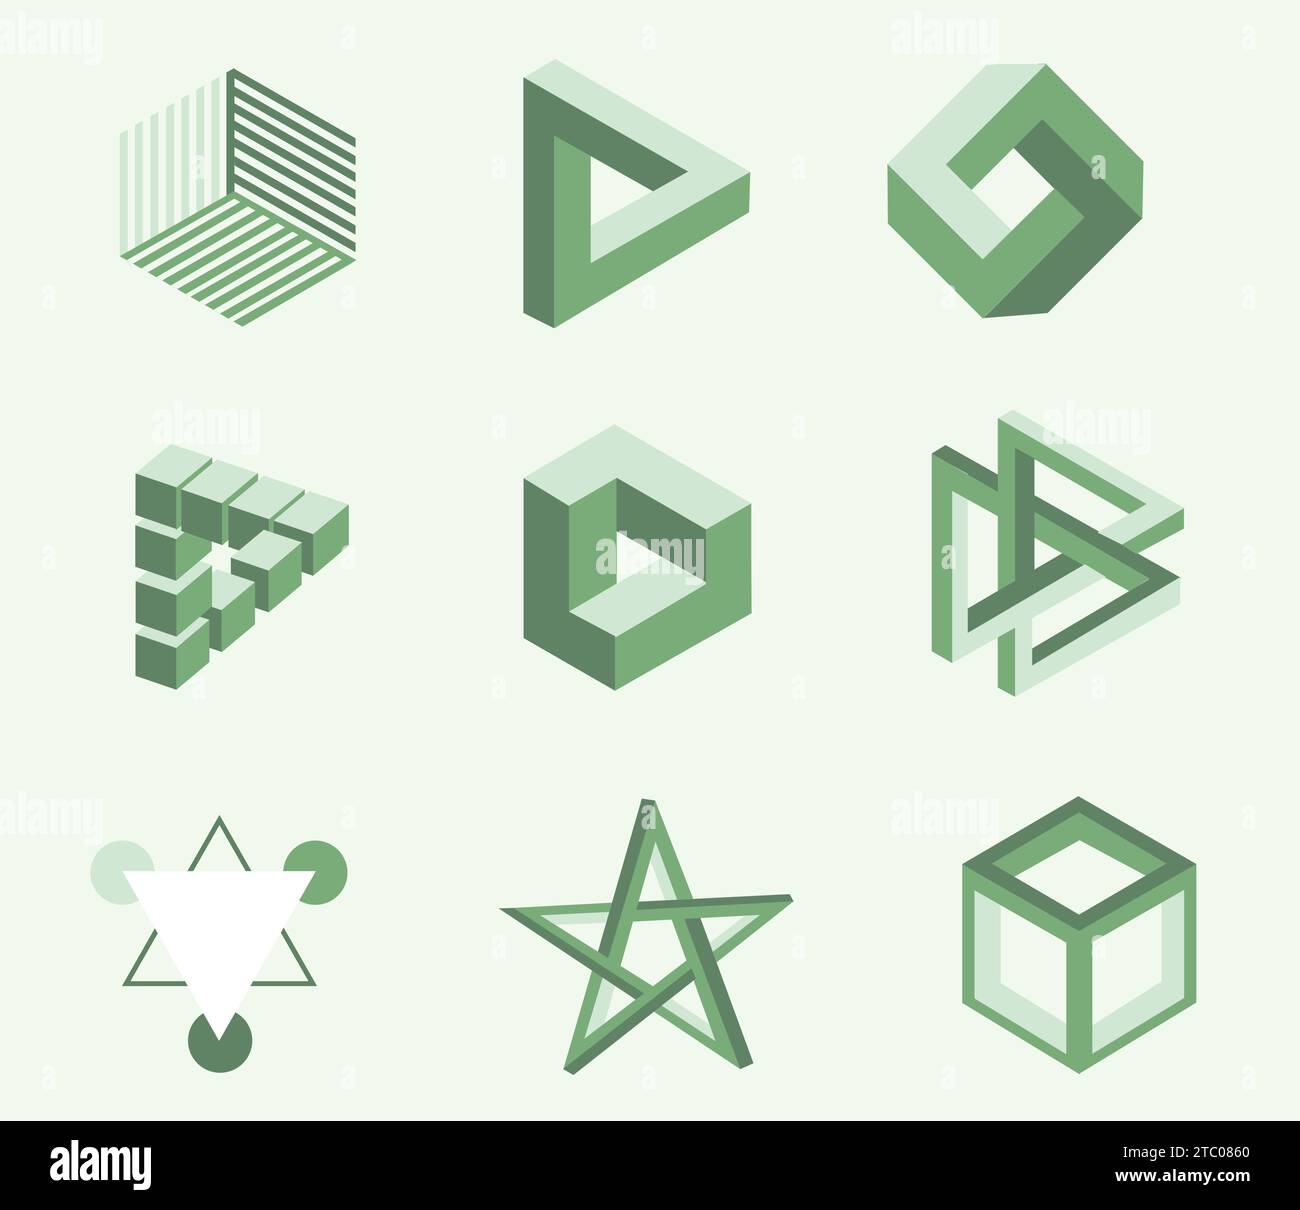 Illusion optical geometric impossible icon symbol set full illustration Stock Vector